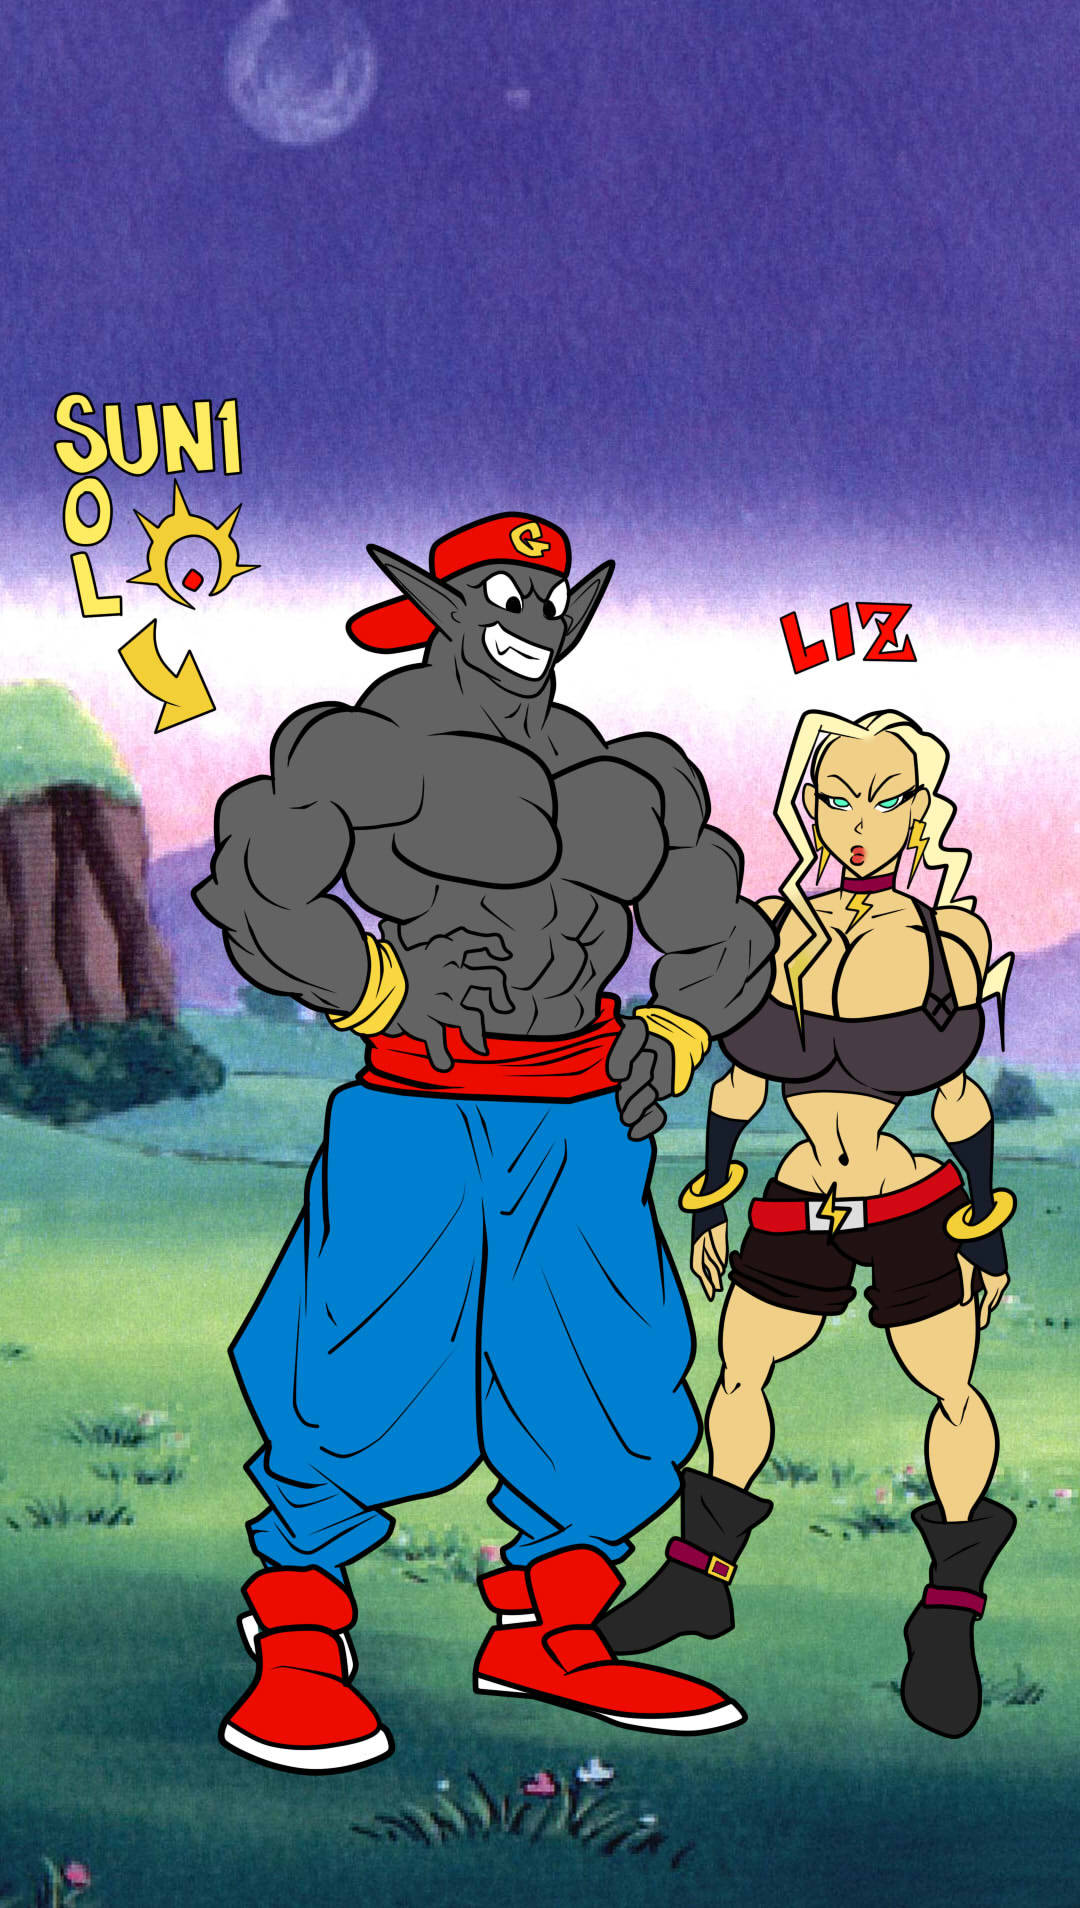 sun1sol: Gol &amp; Liz (colored)   My awesome dynamic duo (O.C.s) Gol(demon form)